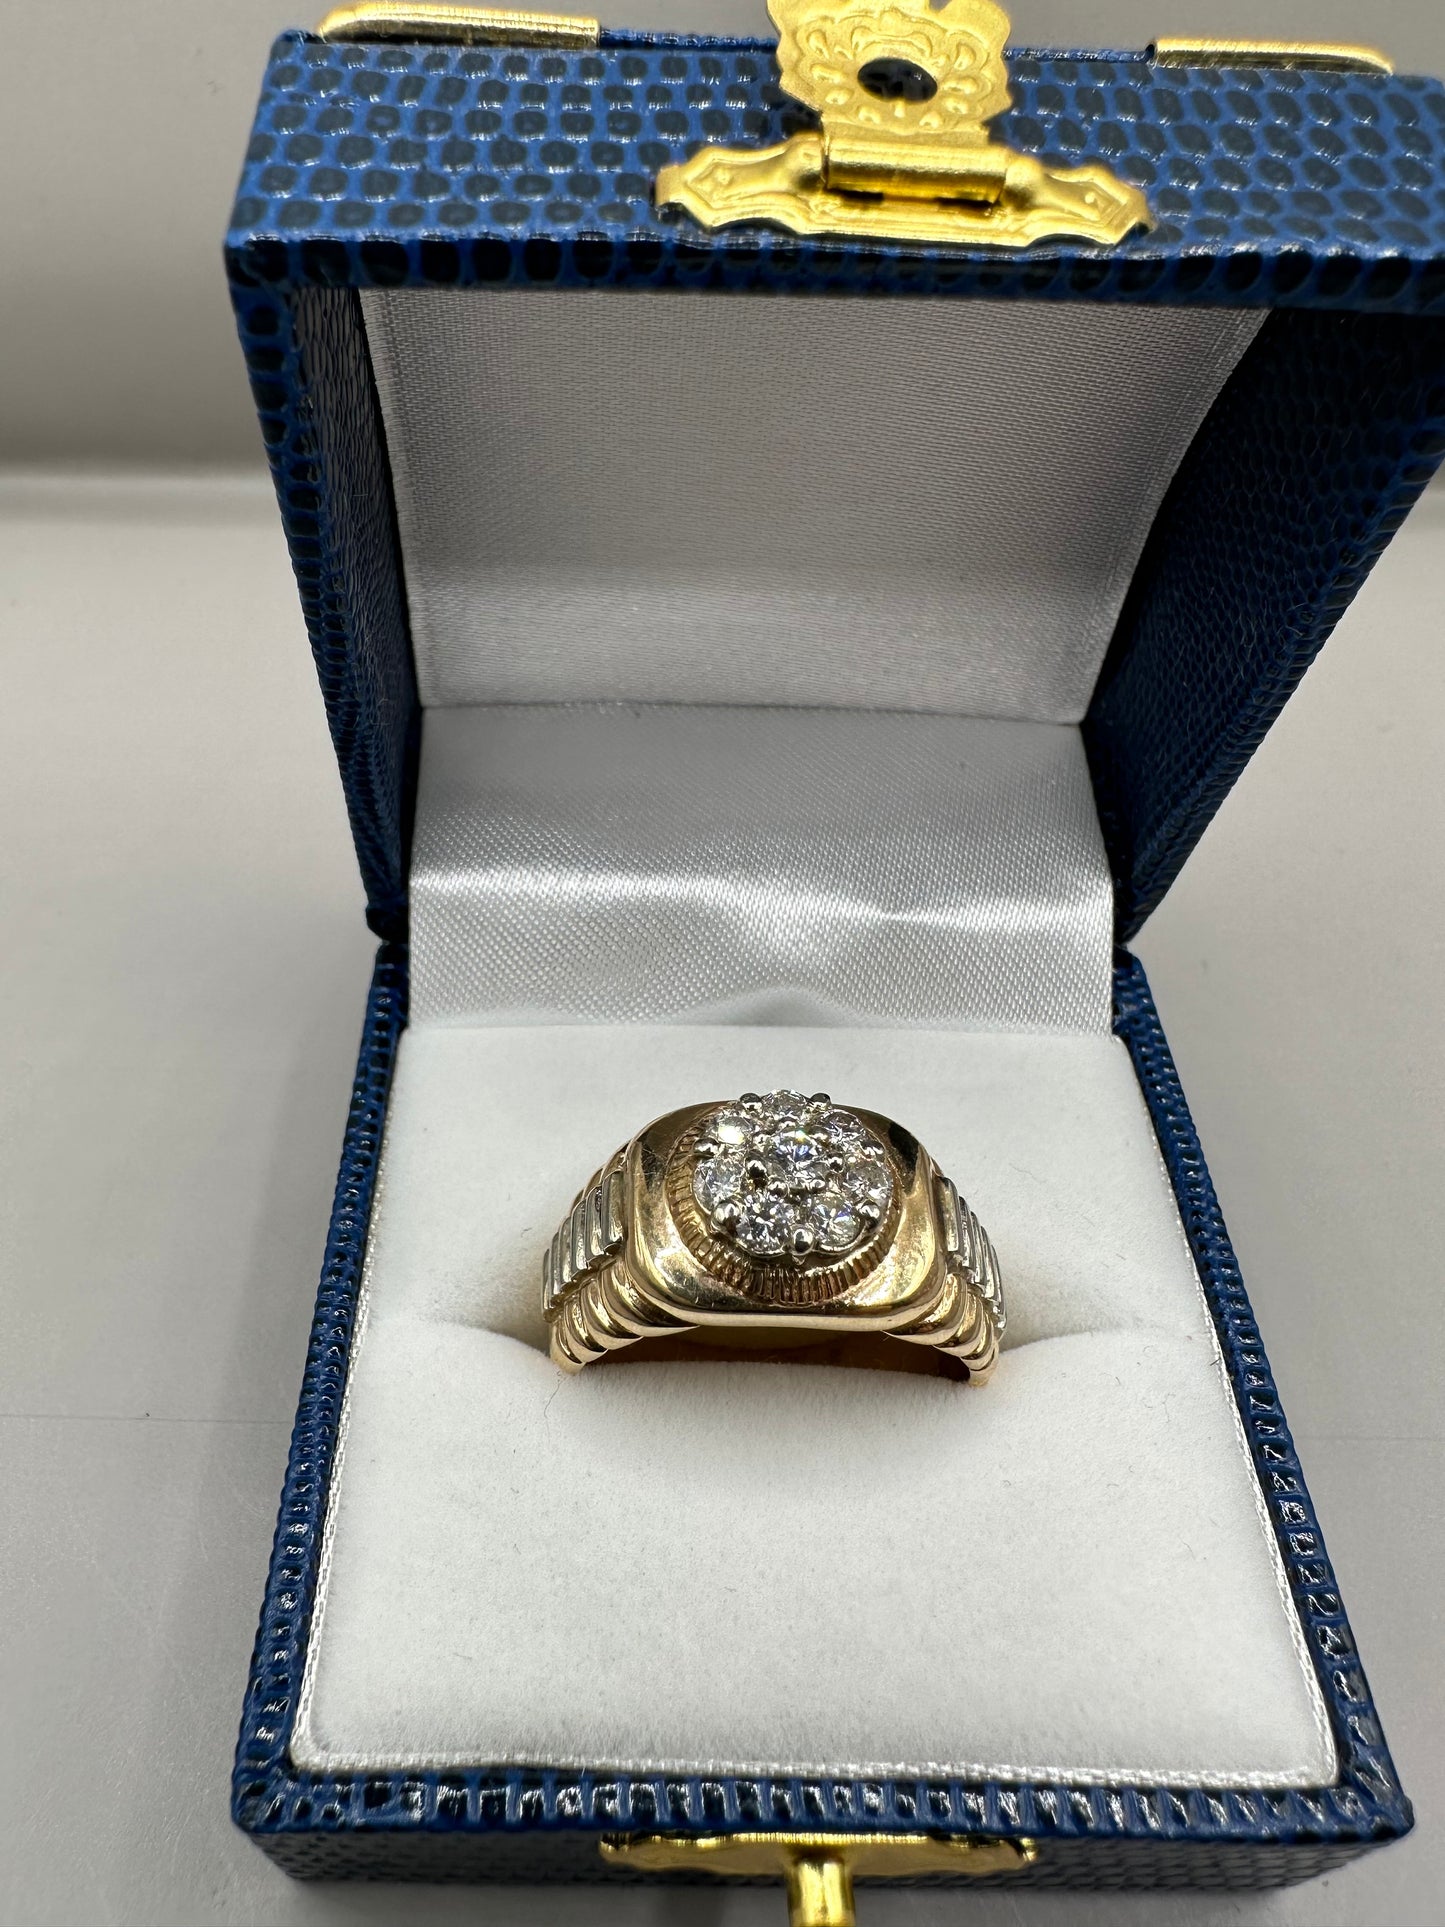 Rolex Style Yellow Gold Diamond Ring